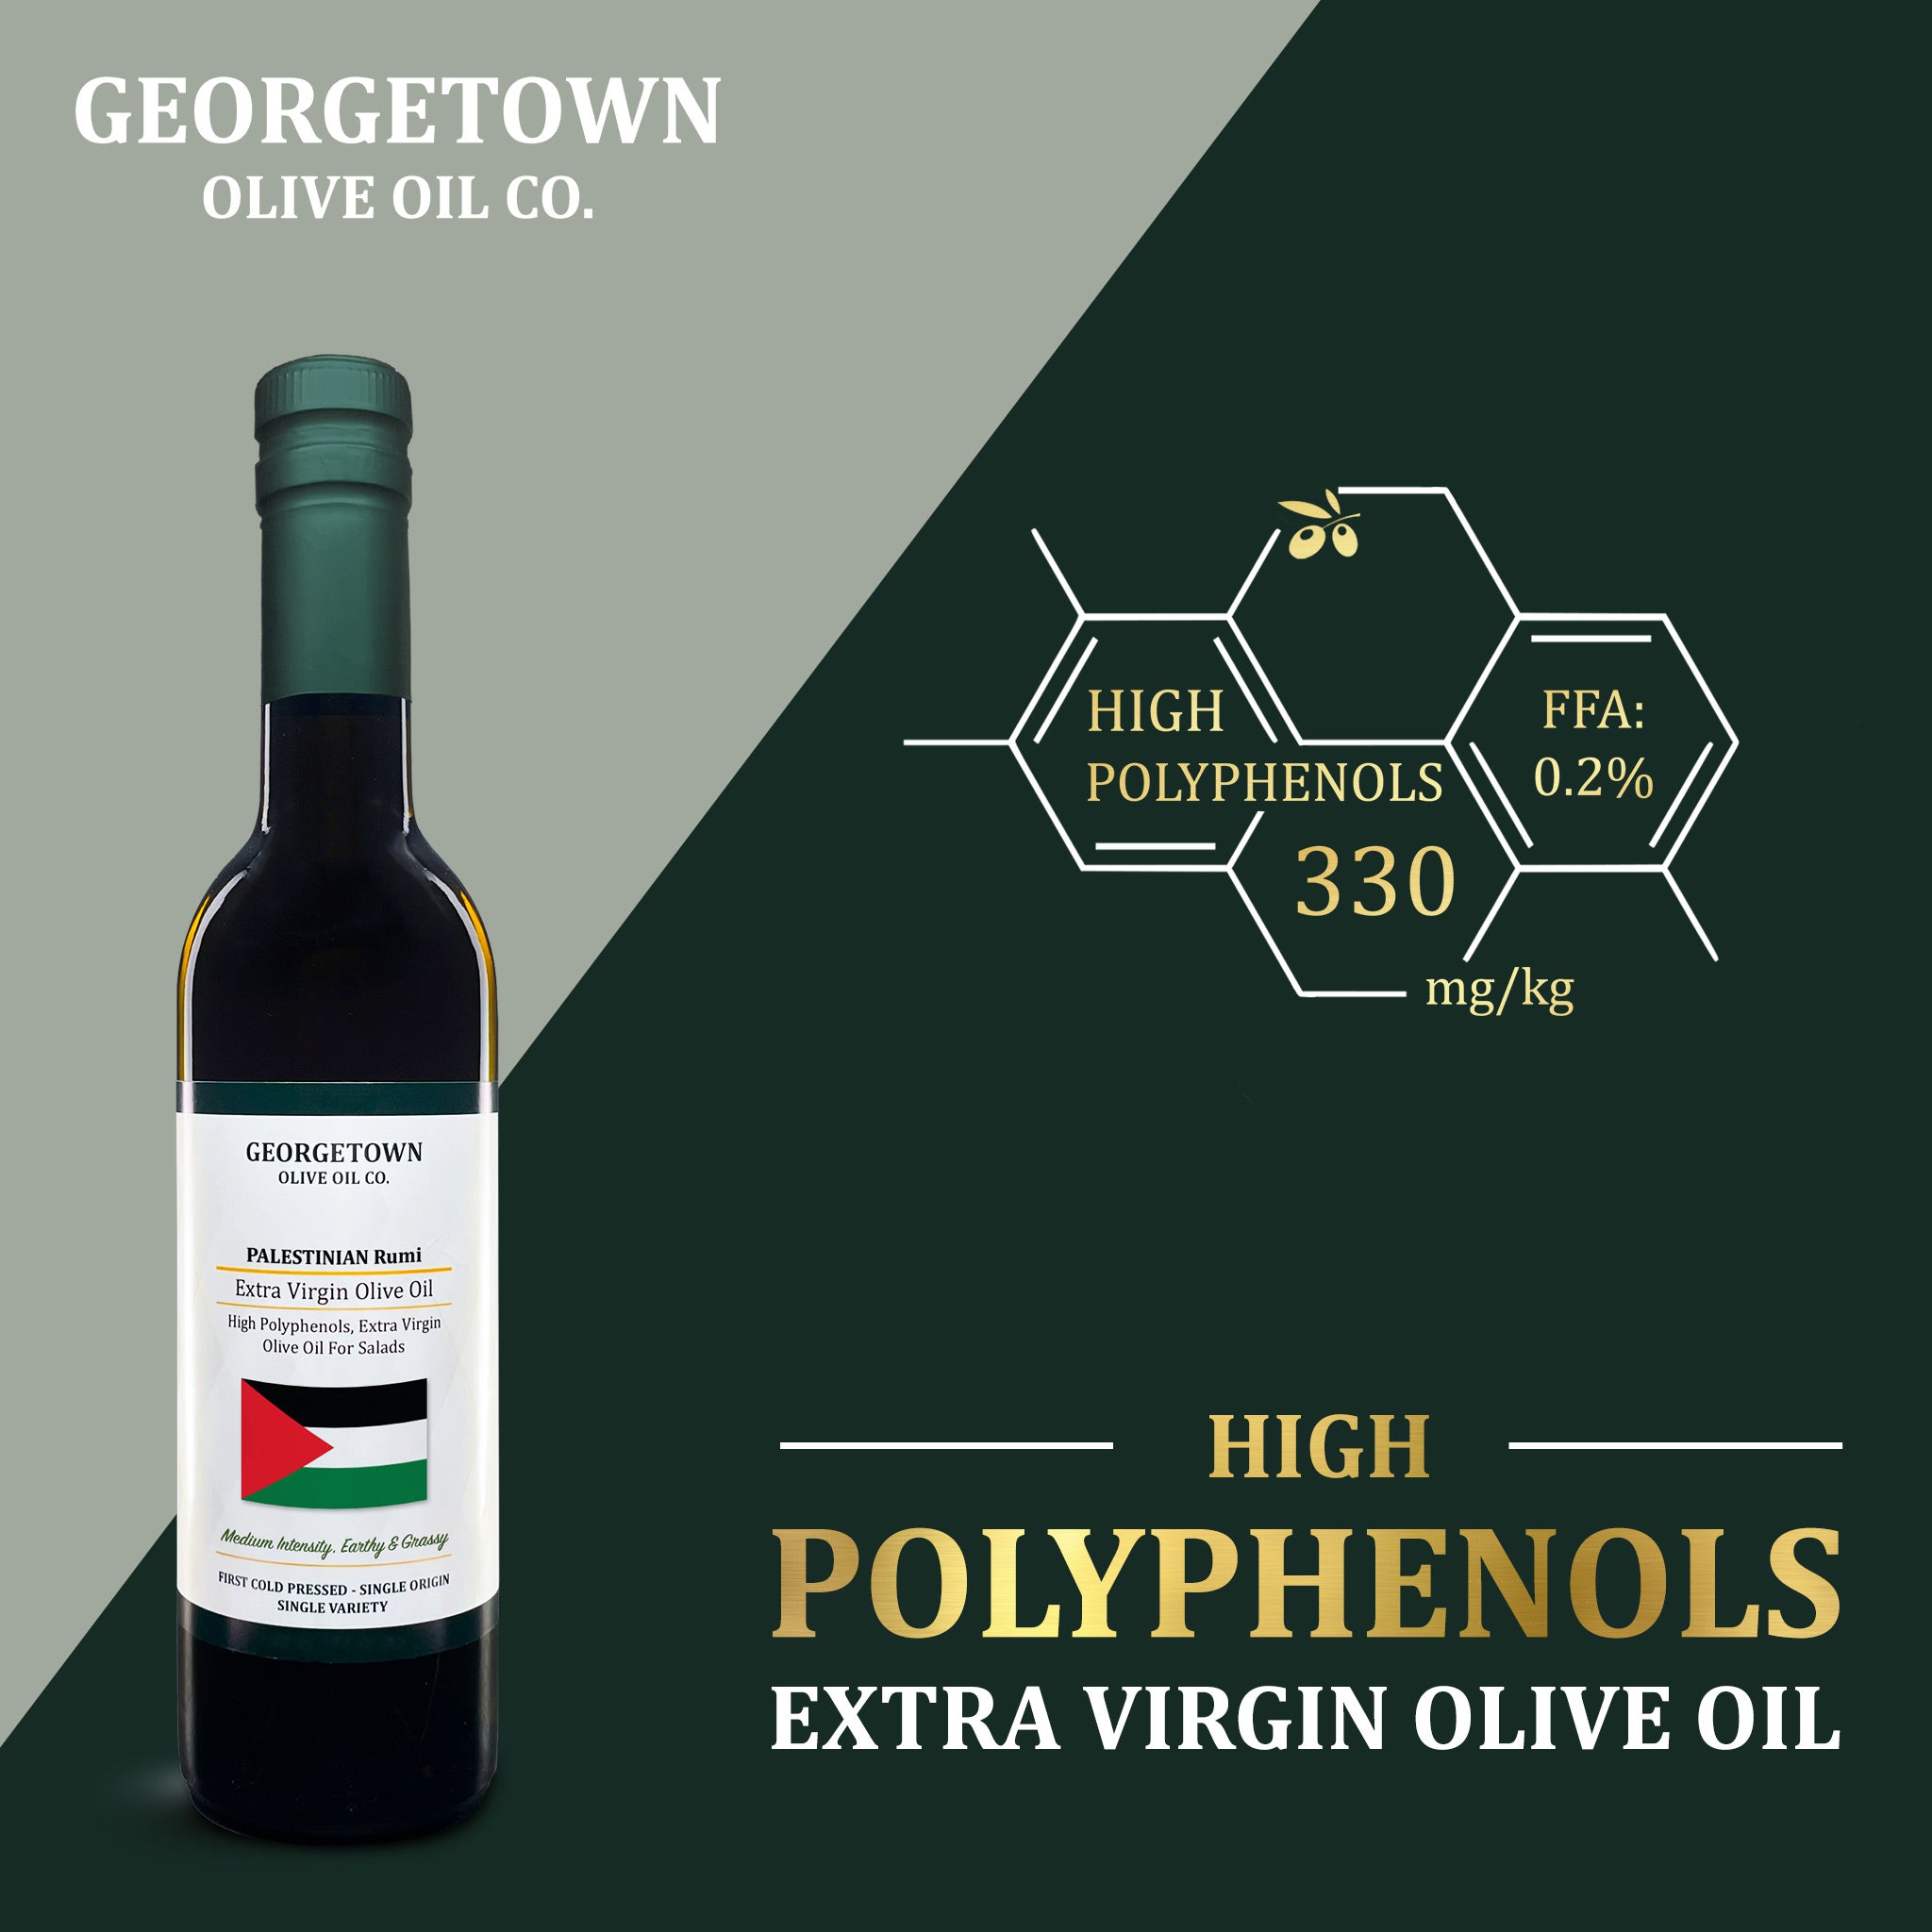 Rumi (PALESTINE) Extra Virgin Olive Oil Georgetown Olive Oil Co.